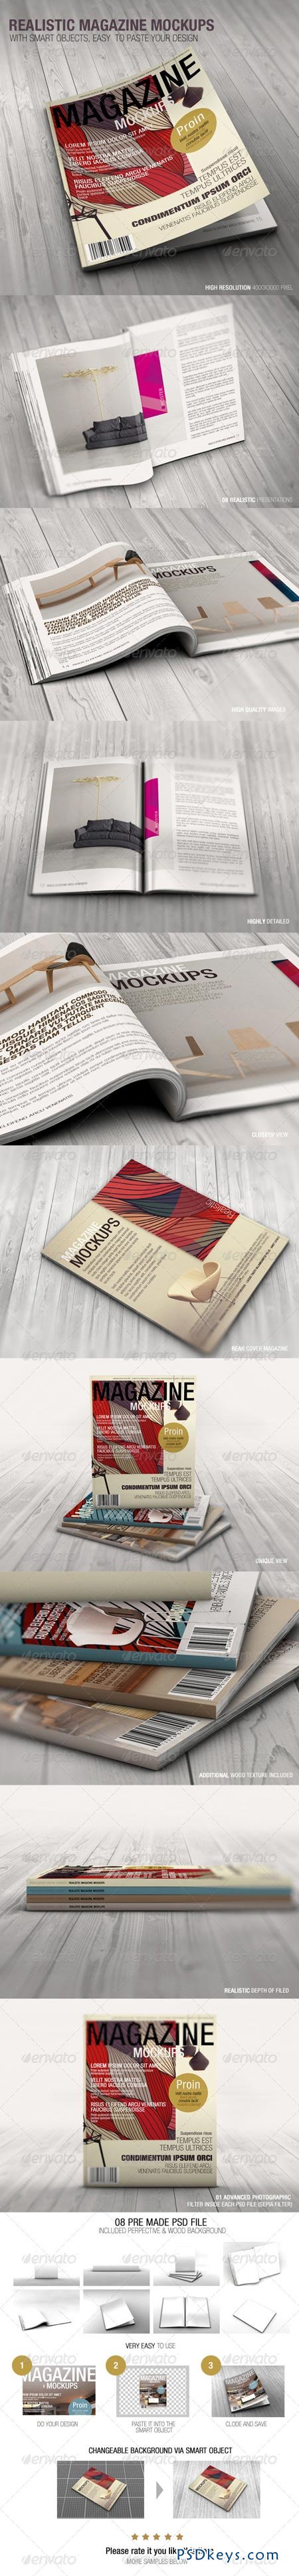 Realistic Magazine Mockups 7480115